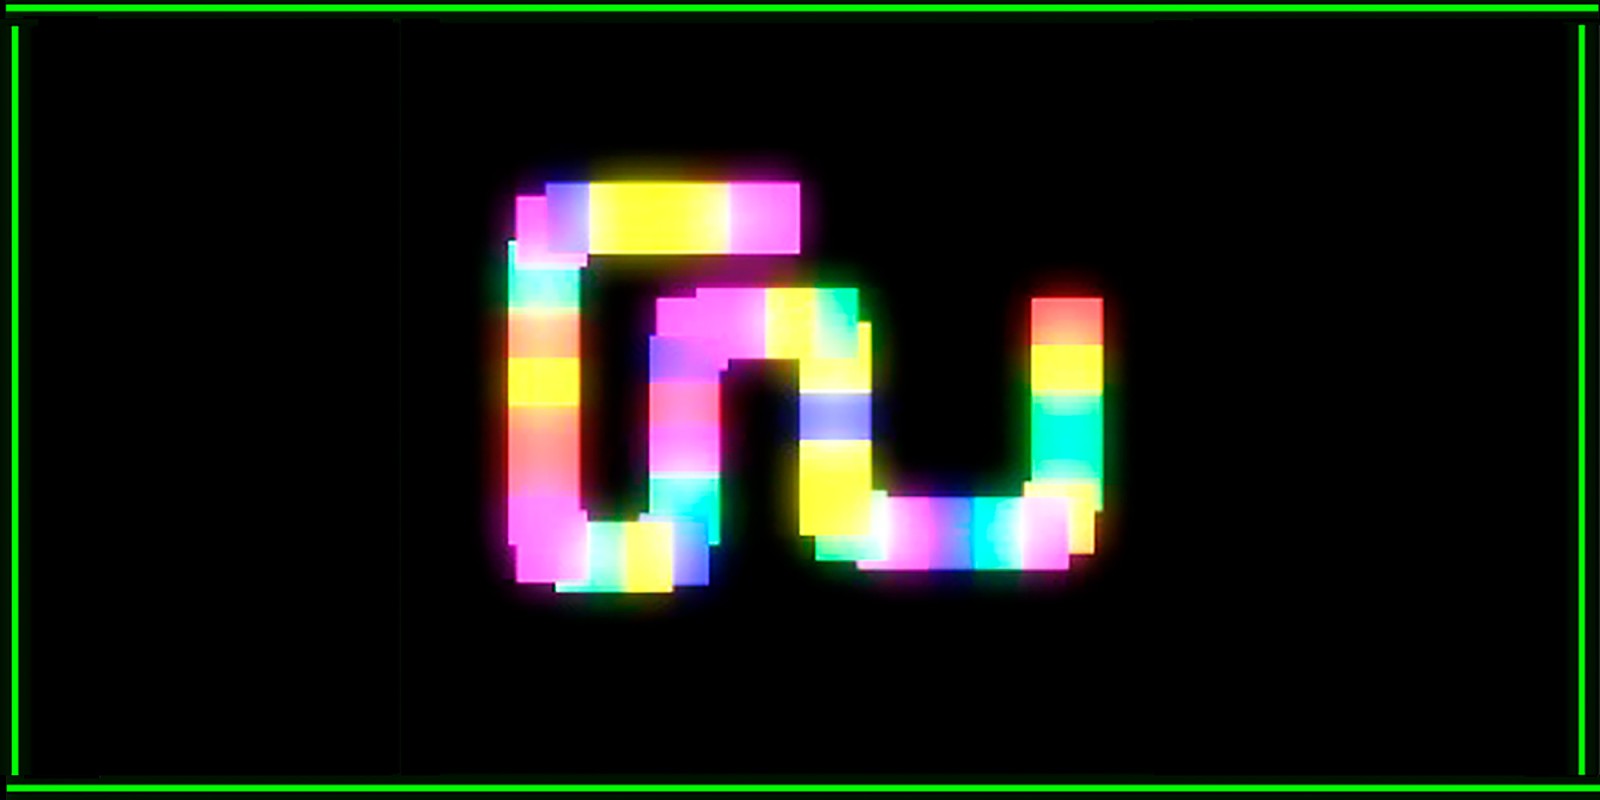 Rainbow Snake | Wii U download software | Games | Nintendo1600 x 800